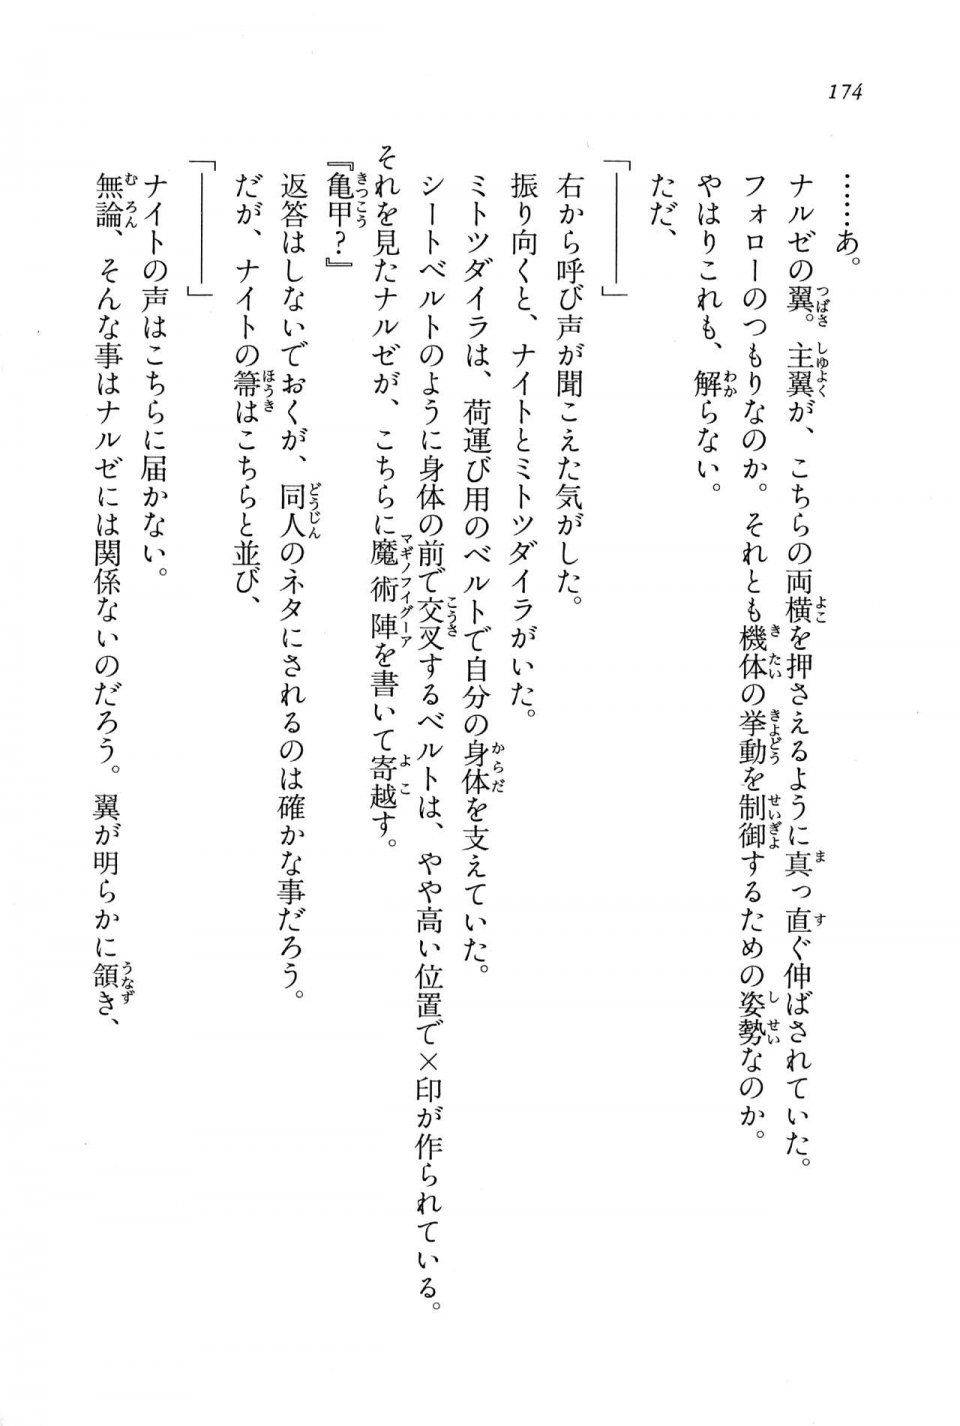 Kyoukai Senjou no Horizon BD Special Mininovel Vol 7(4A) - Photo #178